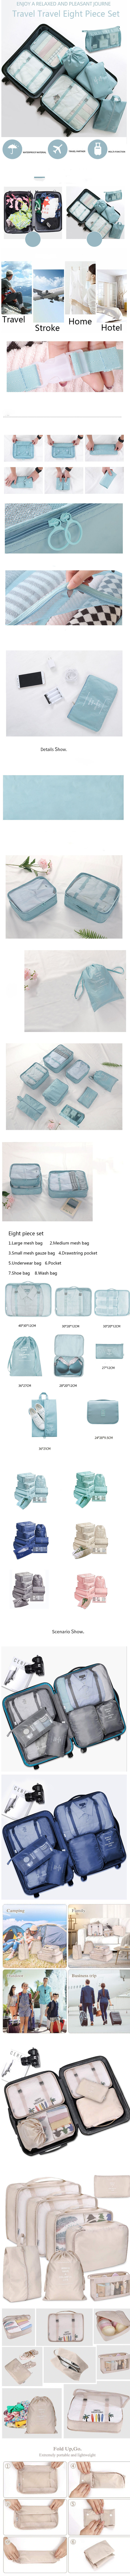 8-Pieces-Set-Folding-Clothes-Organizer-Mesh-Drawstring-Underwear-Pocket-Travel-Clothing-Shoe-Wash-St-1655754-1